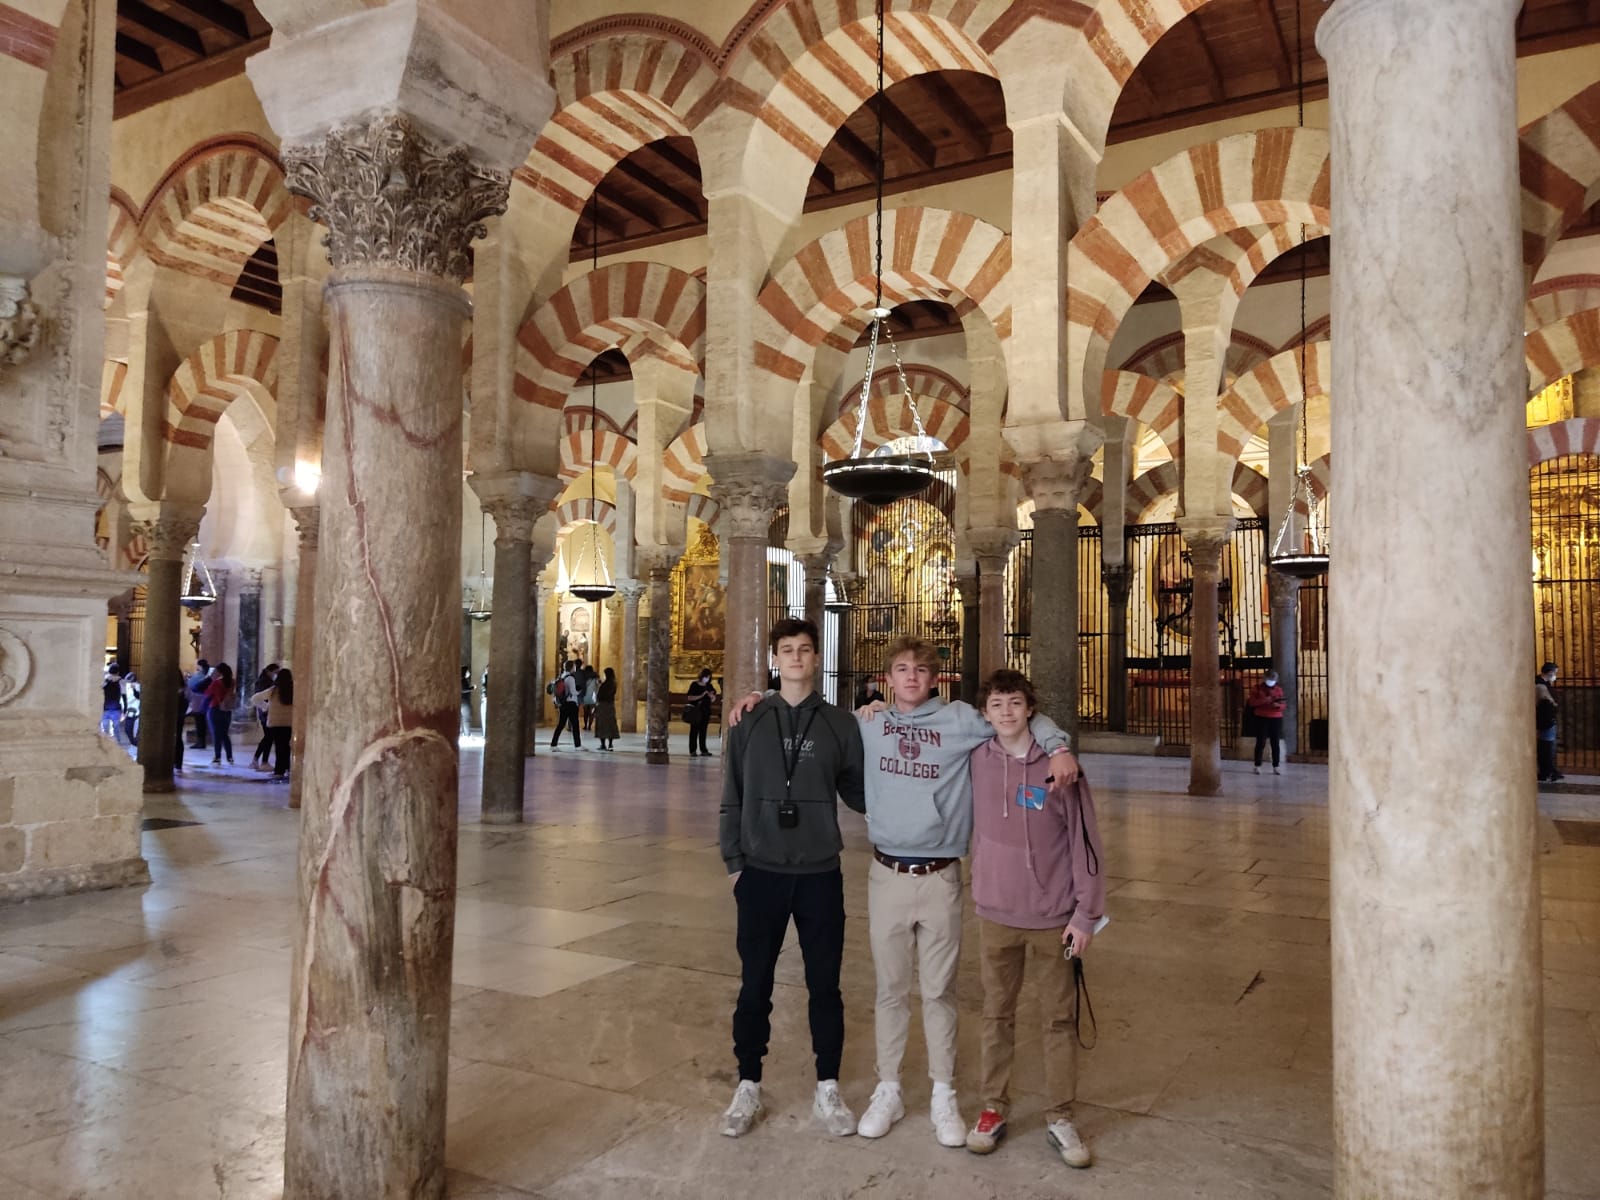 Proctor en Segovia studies Islamic and Christian architecture in the Mezquita of Cordoba